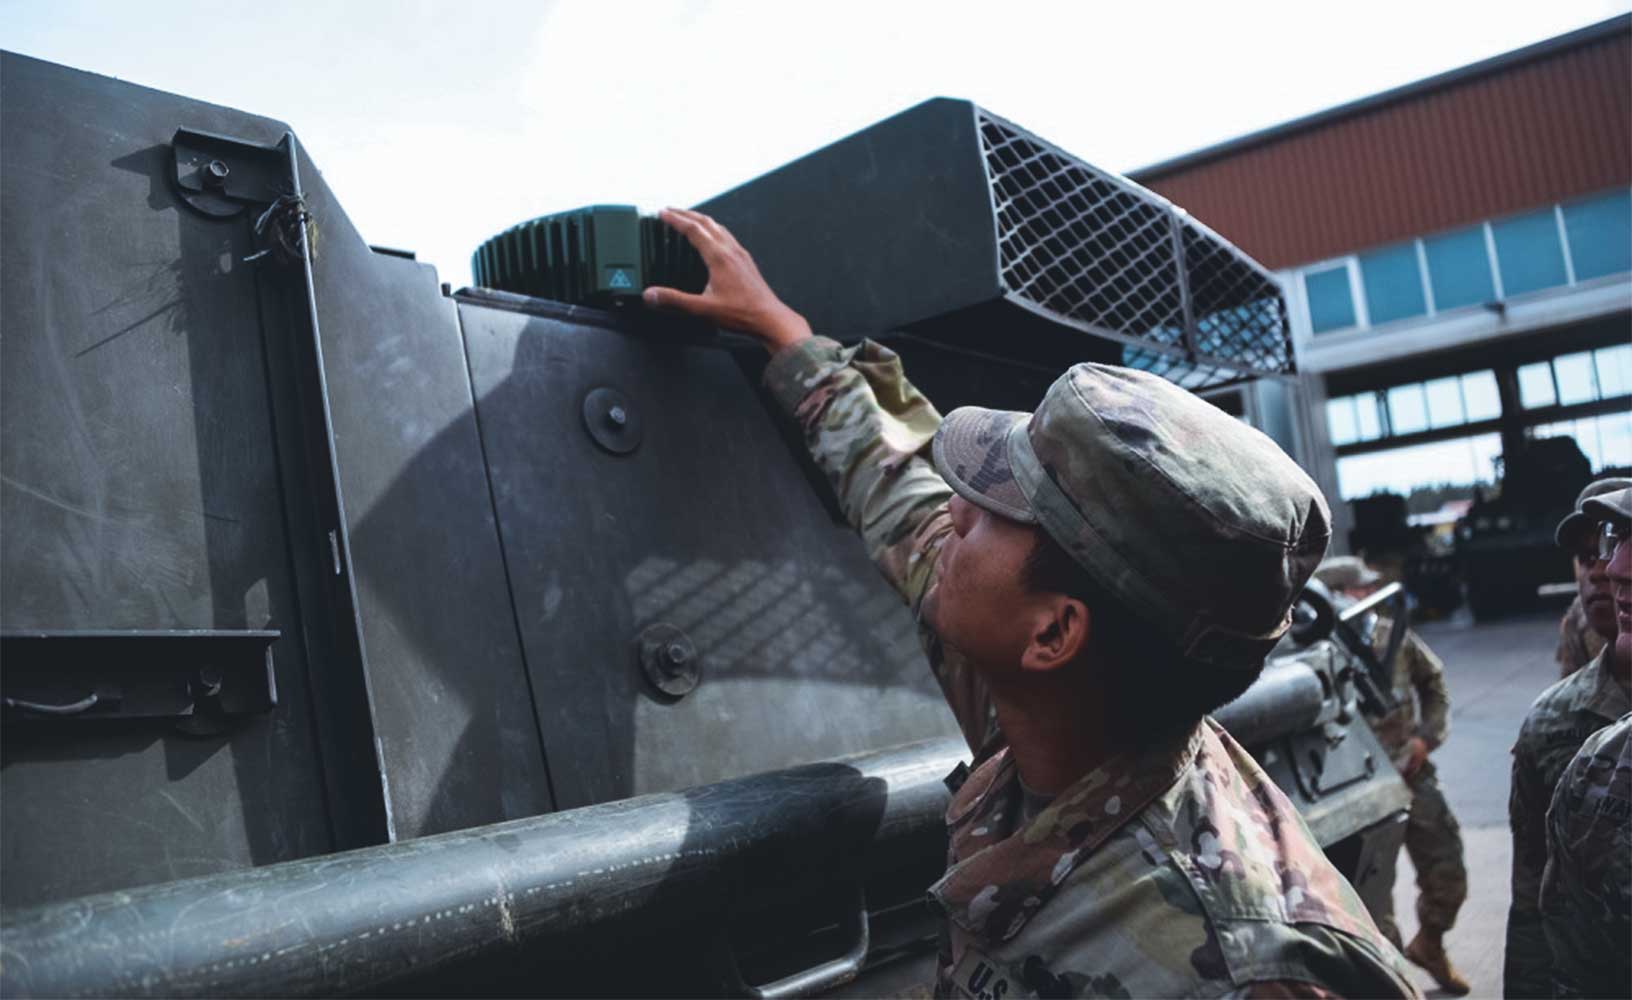 Un soldat installe un GAJT-710ML sur un véhicule militaire. (<a href="https://www.army.mil/article/229091/army_equips_maps_gen_i" target="_blank" rel="noopener noreferrer">Crédit photo : U.S. Army</a>).